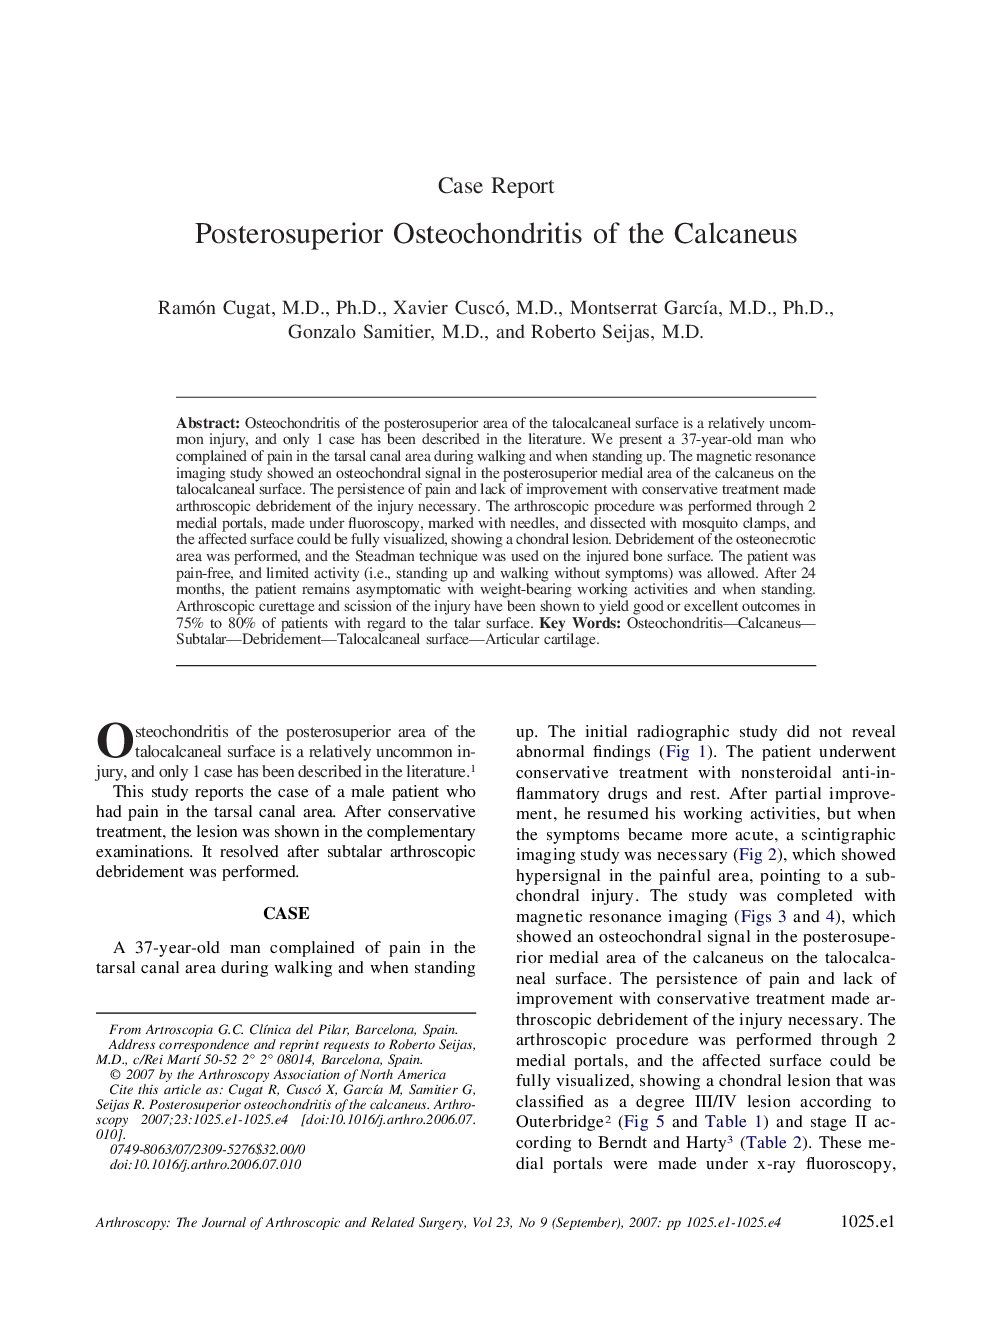 Posterosuperior Osteochondritis of the Calcaneus